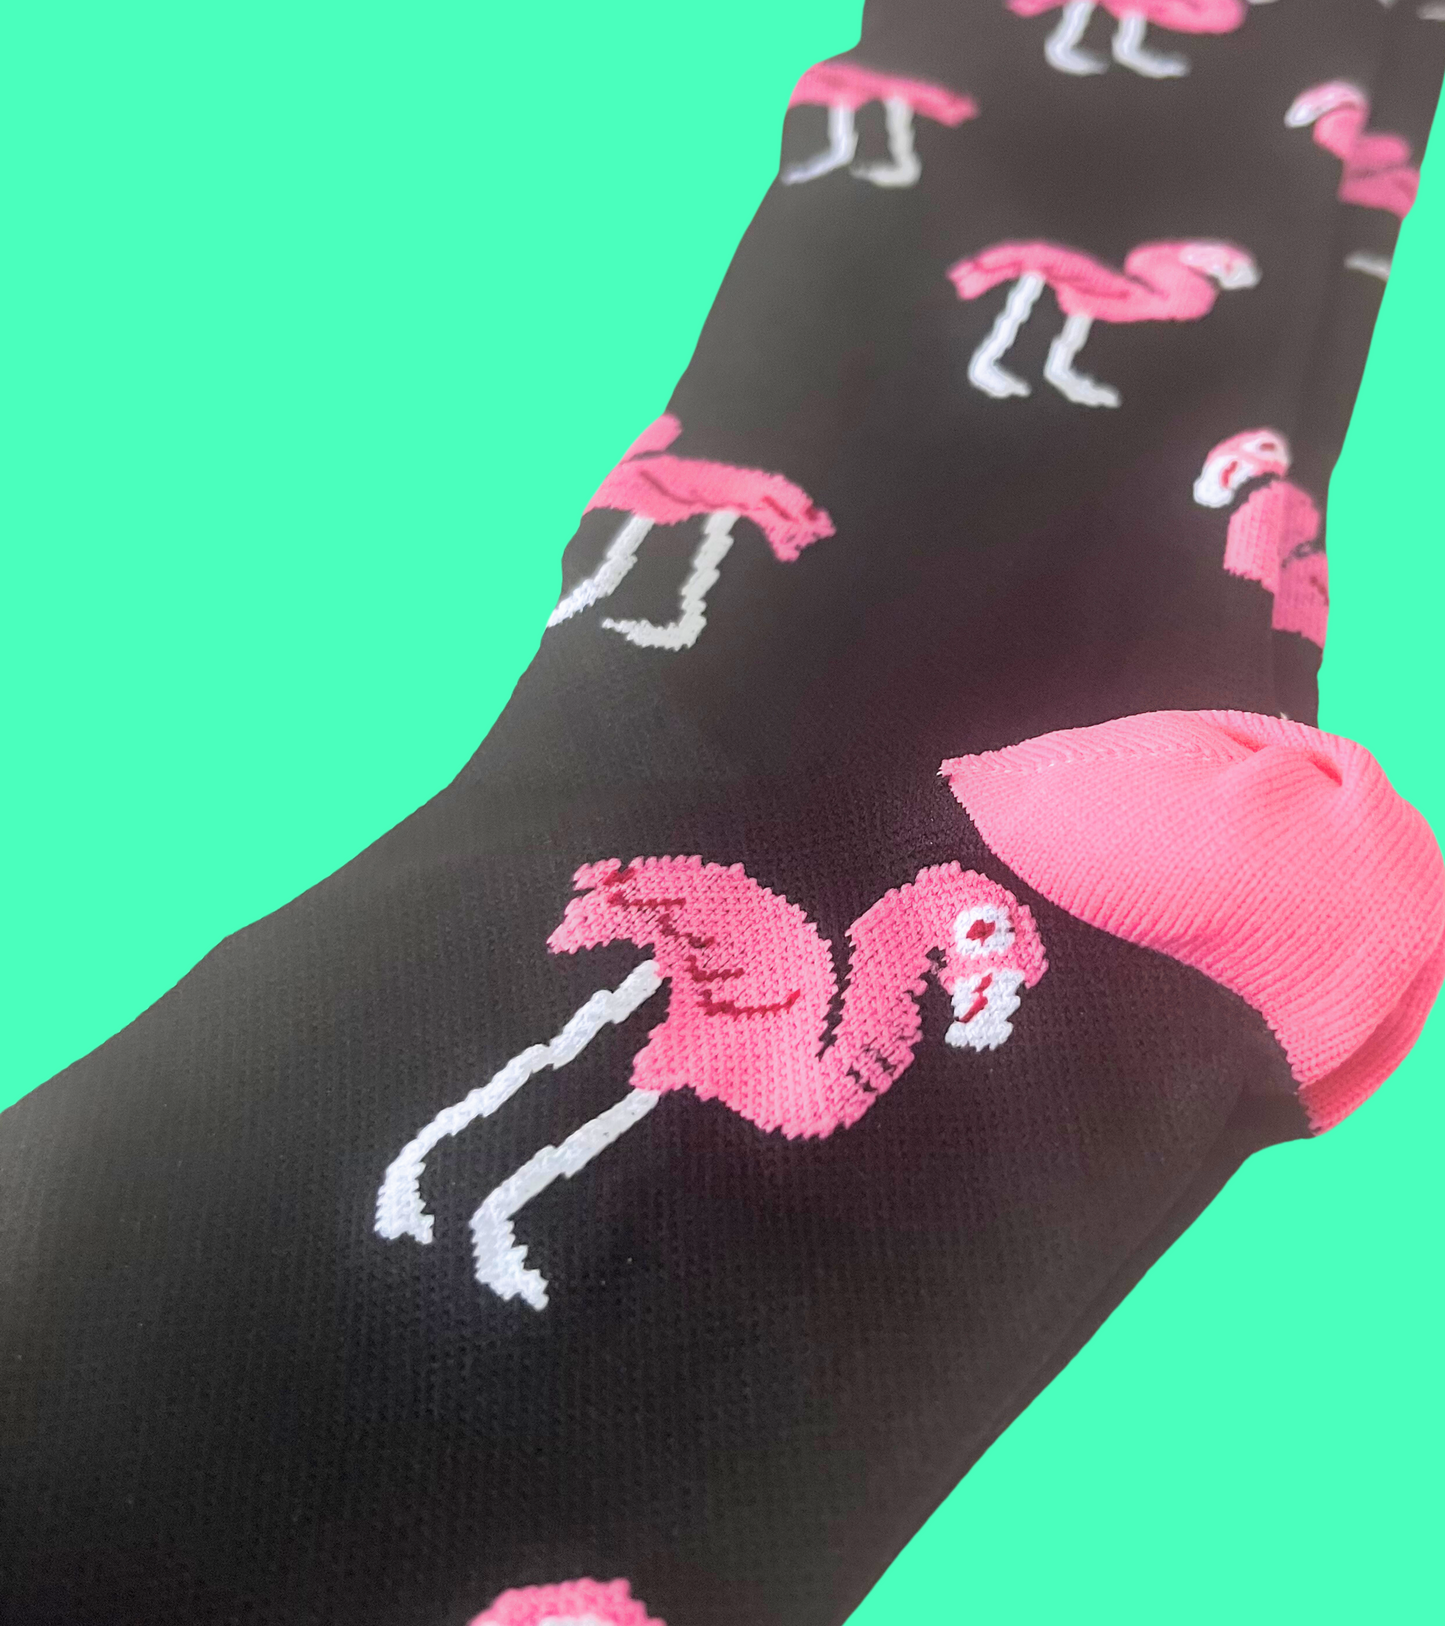 Flamingo Compression Socks